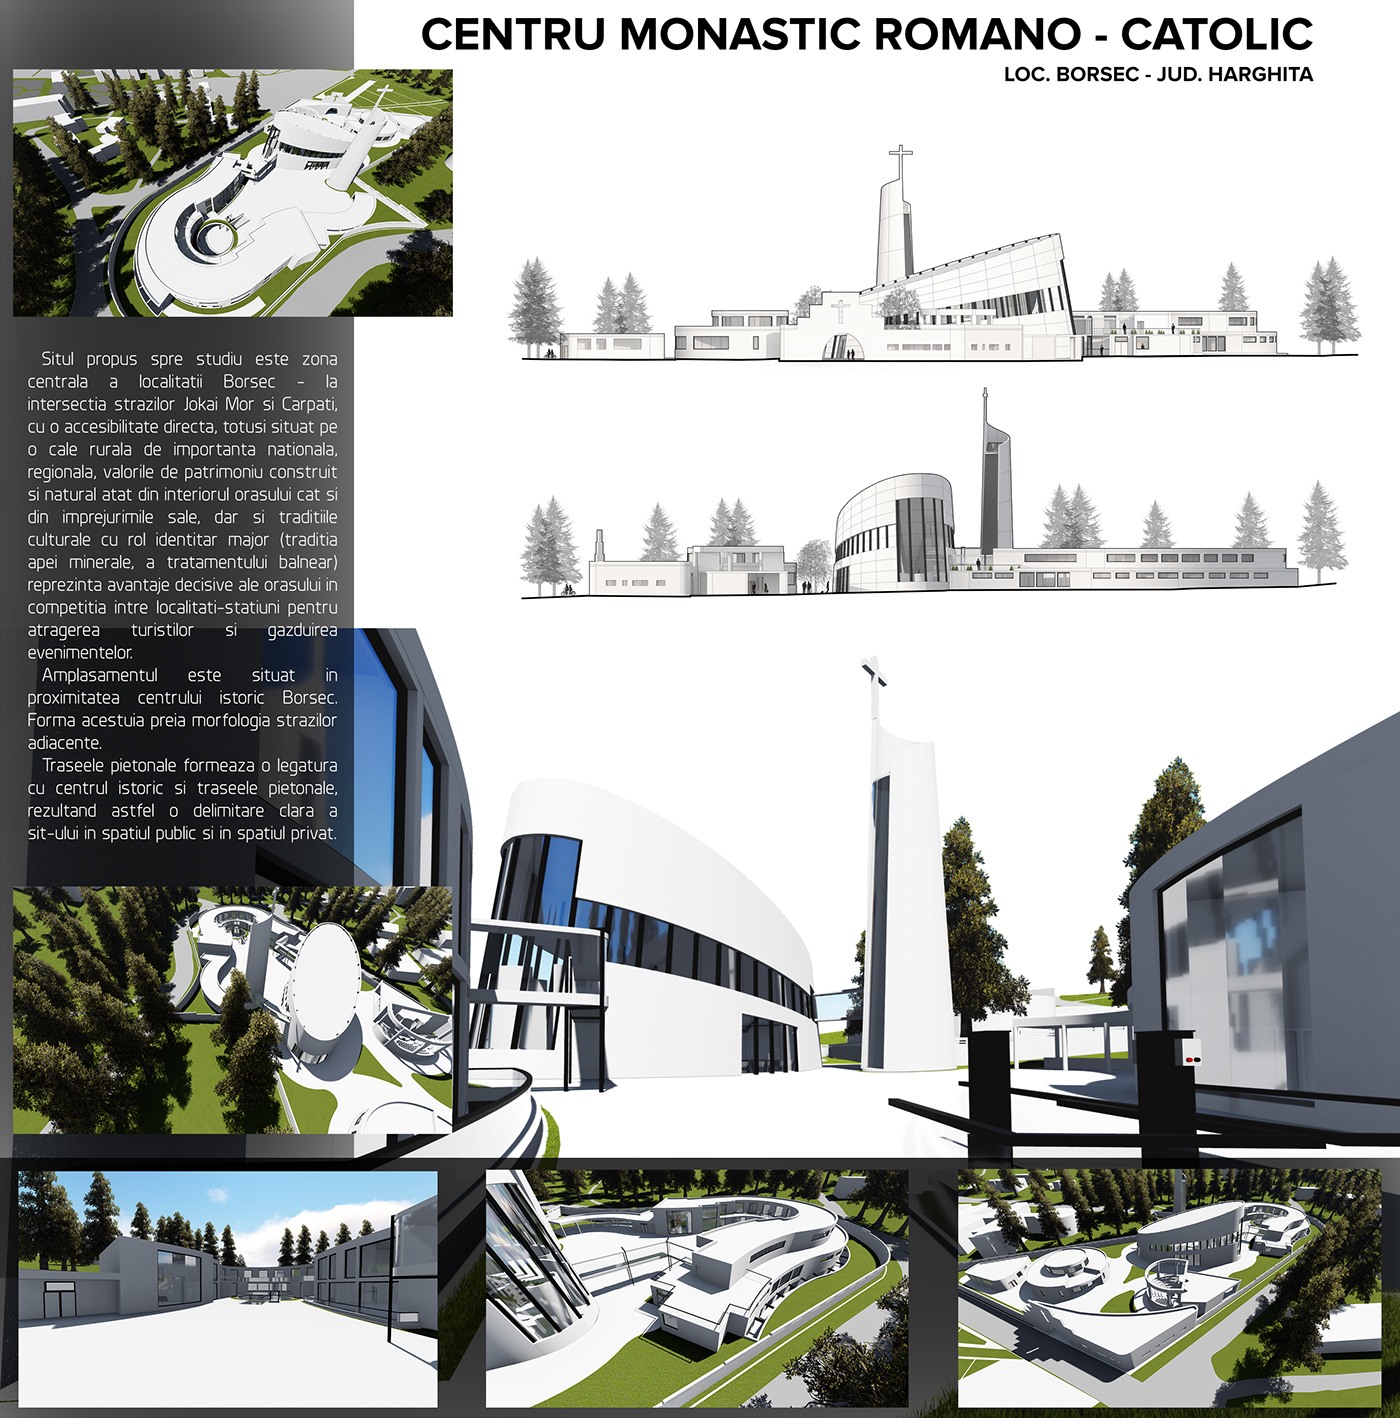 church monastic center Roman-Catholic borsec cultural